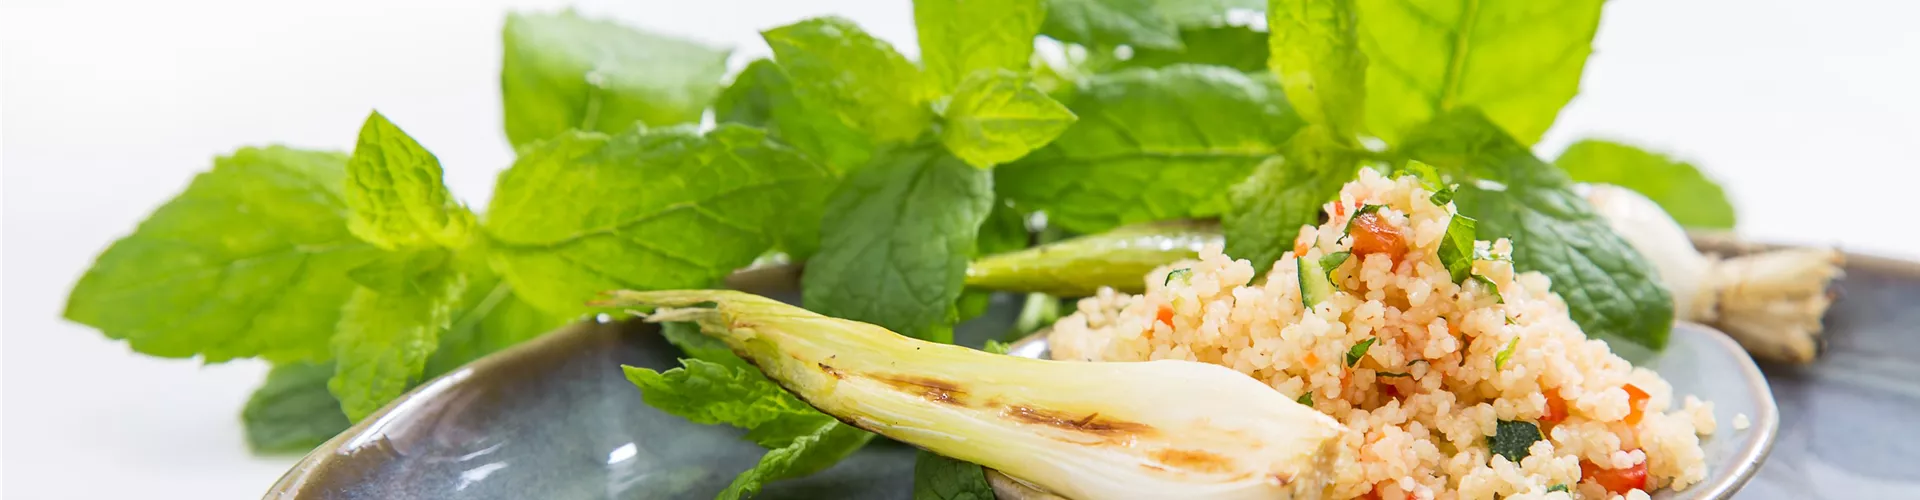 Idealer Sommer-Snack: Couscous-Salat - Bellaflora